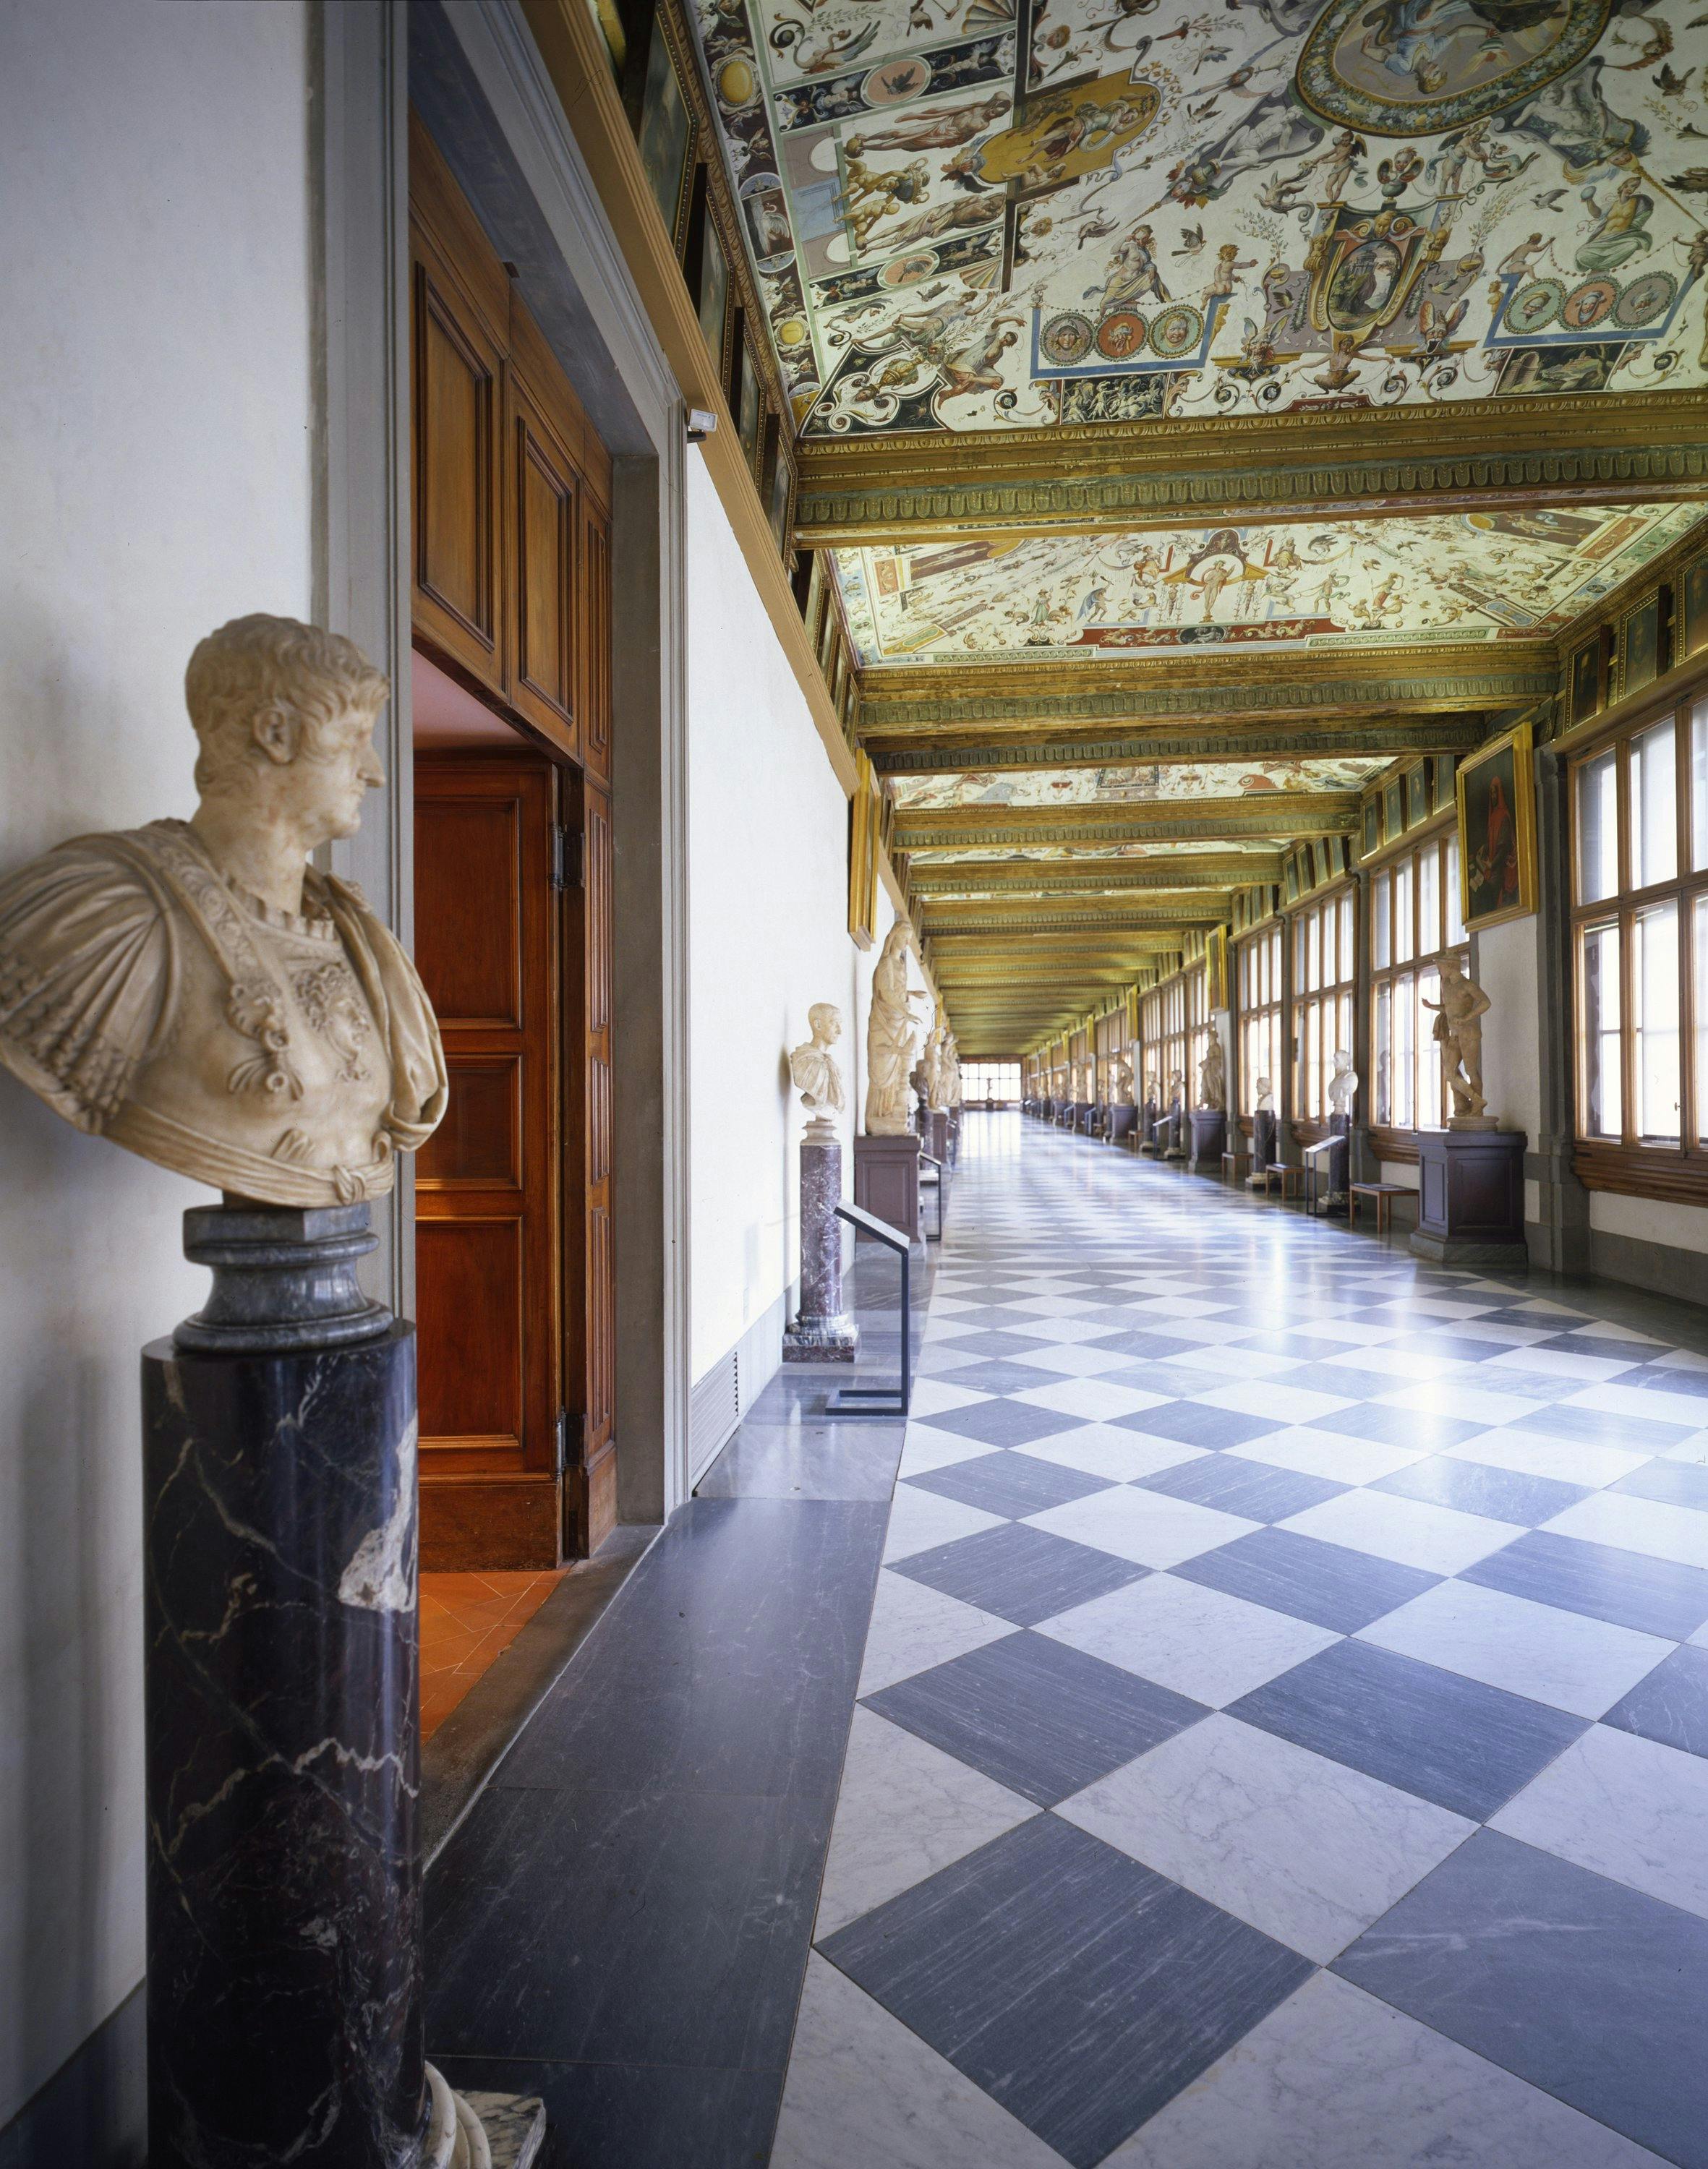 The Gallery Corridors